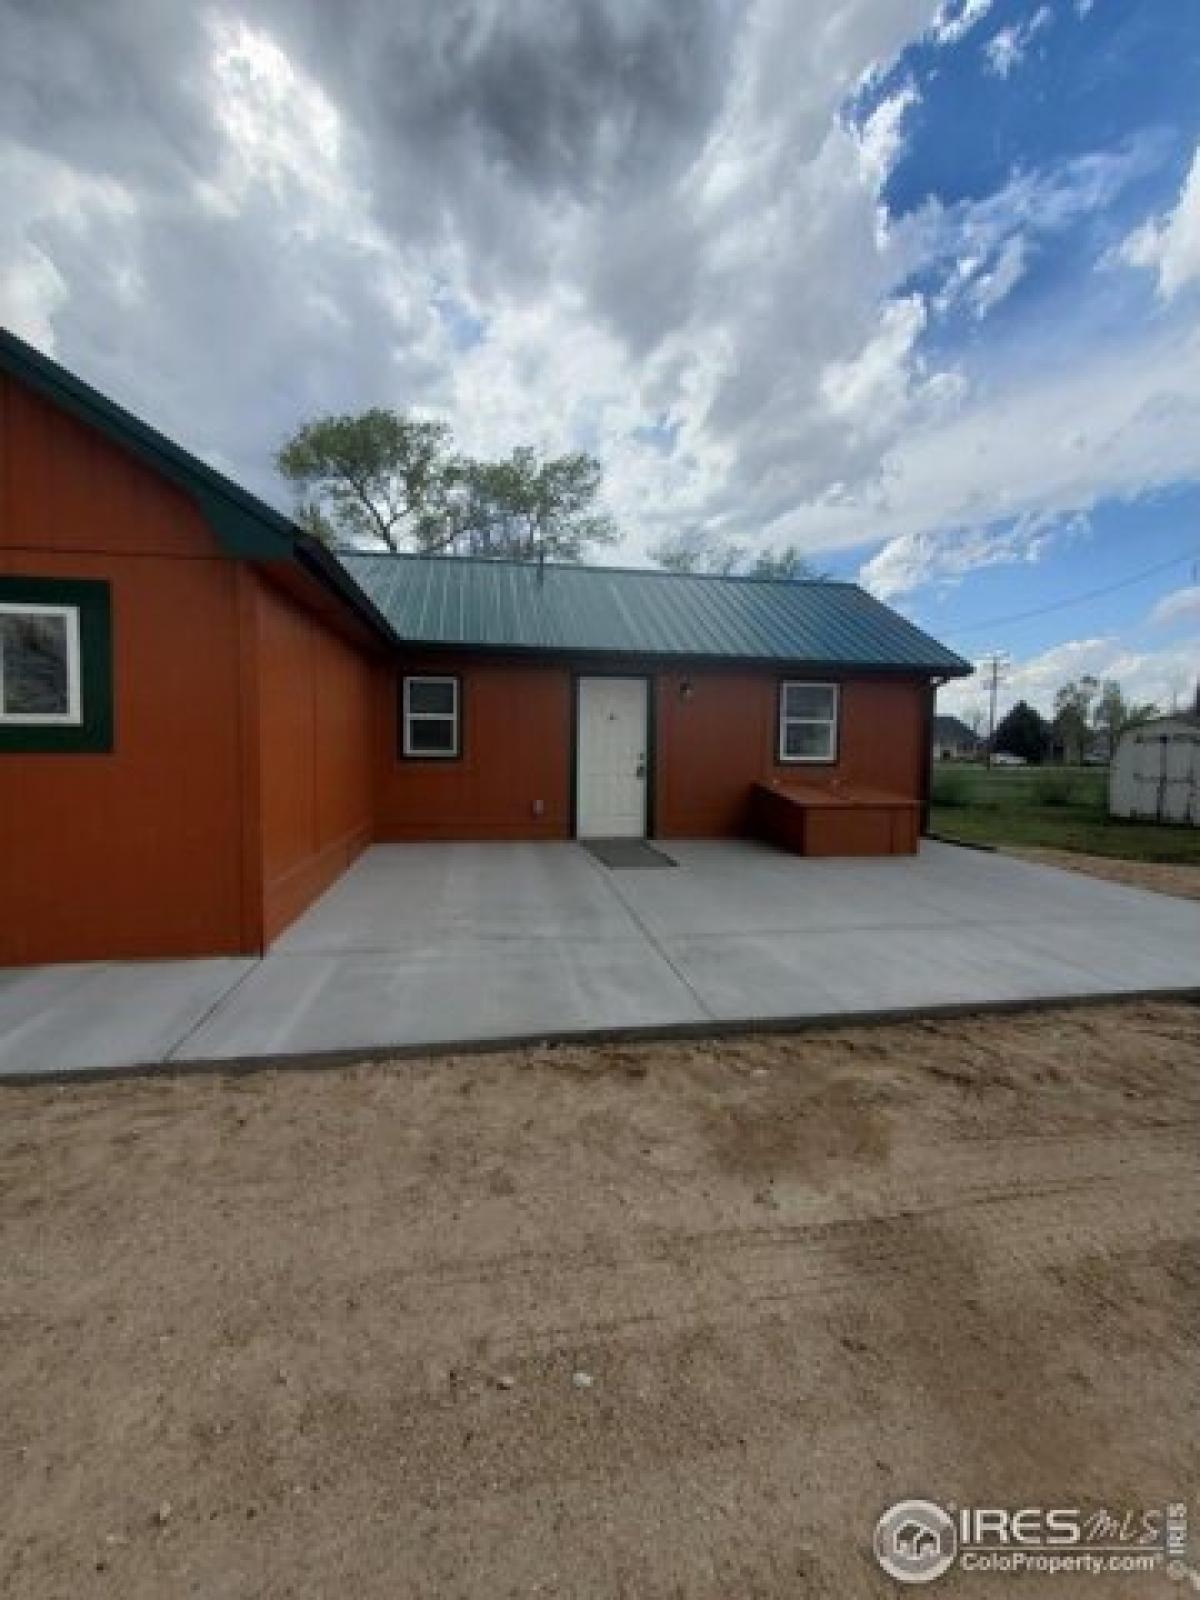 Picture of Home For Sale in Iliff, Colorado, United States